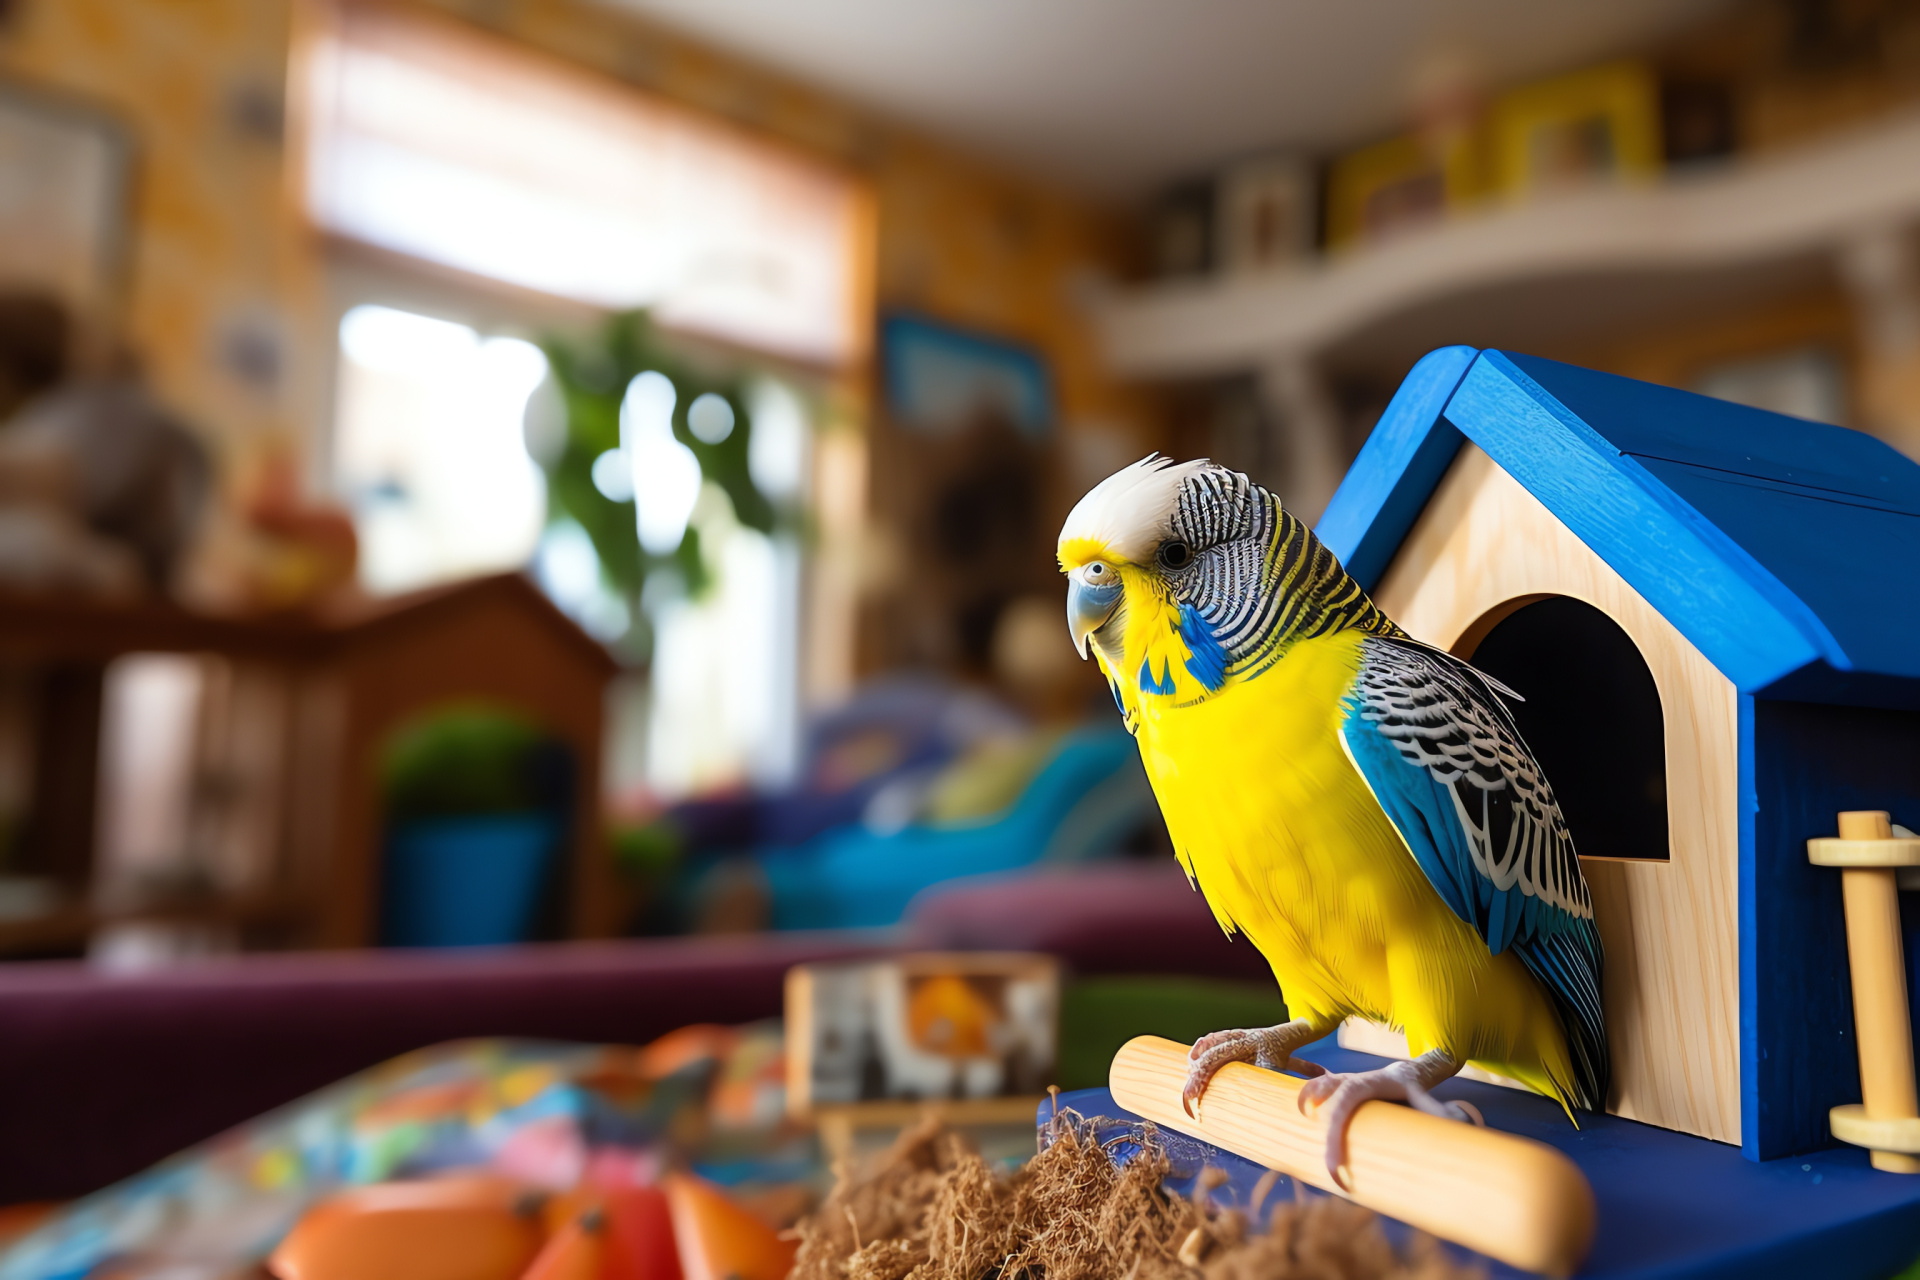 Budgie, parrot pet, cobalt feathers, domestic setting, avian playthings, HD Desktop Image